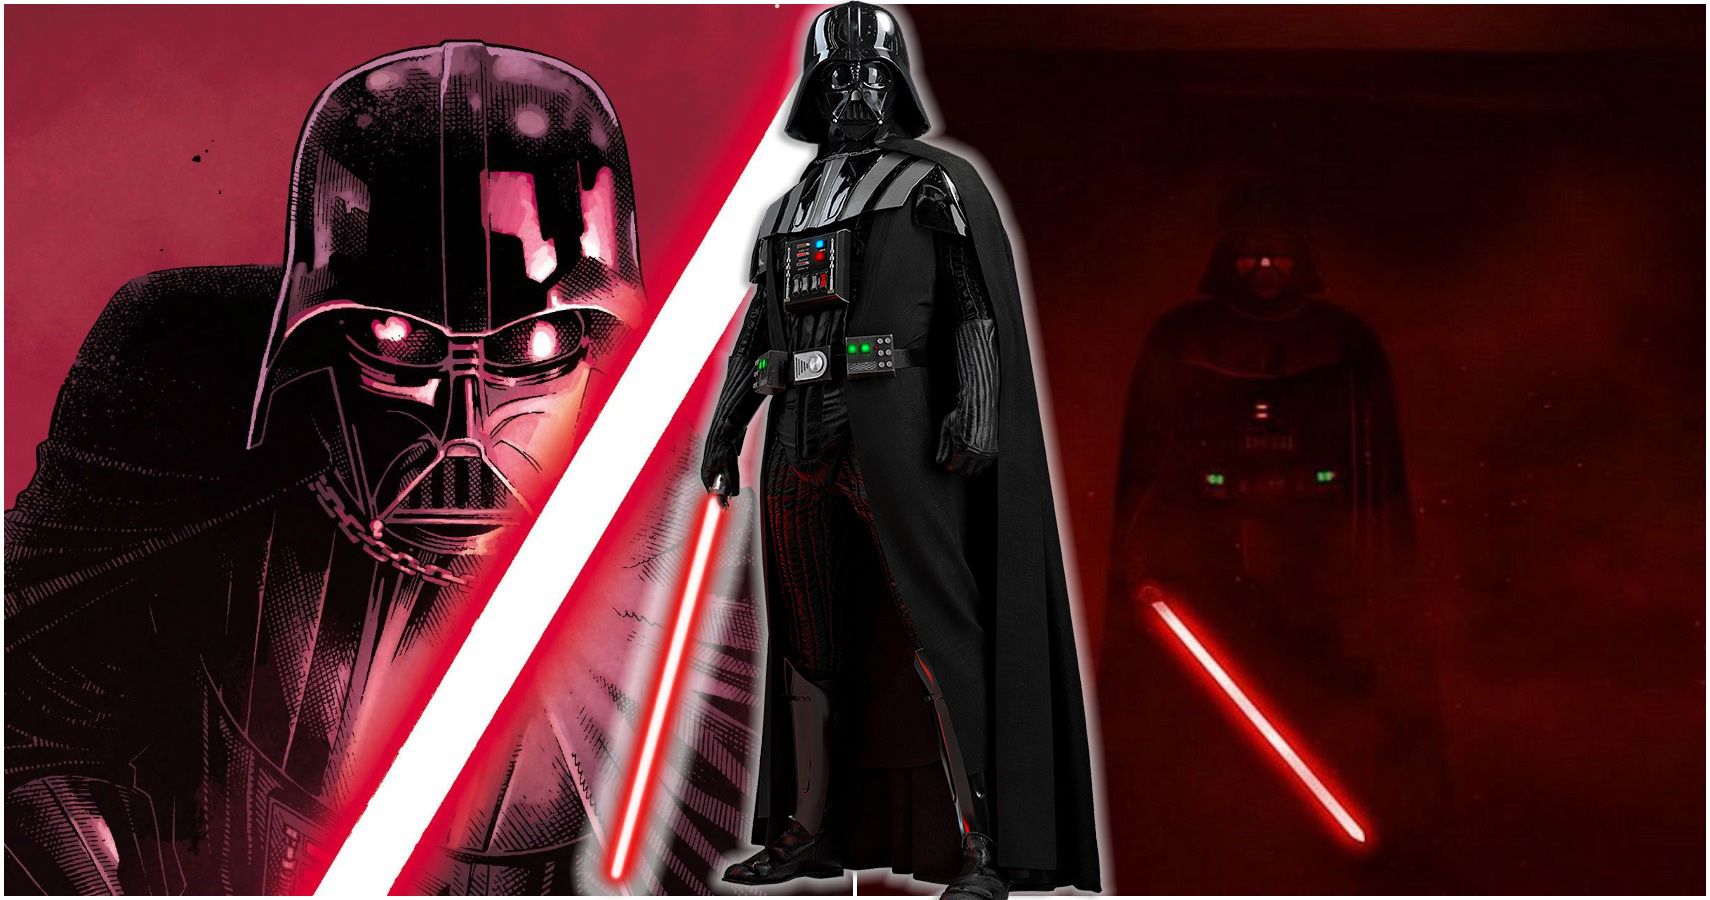 Darth Vader Lightsaber Weapon VERY CLOSE Star Wars  MP 